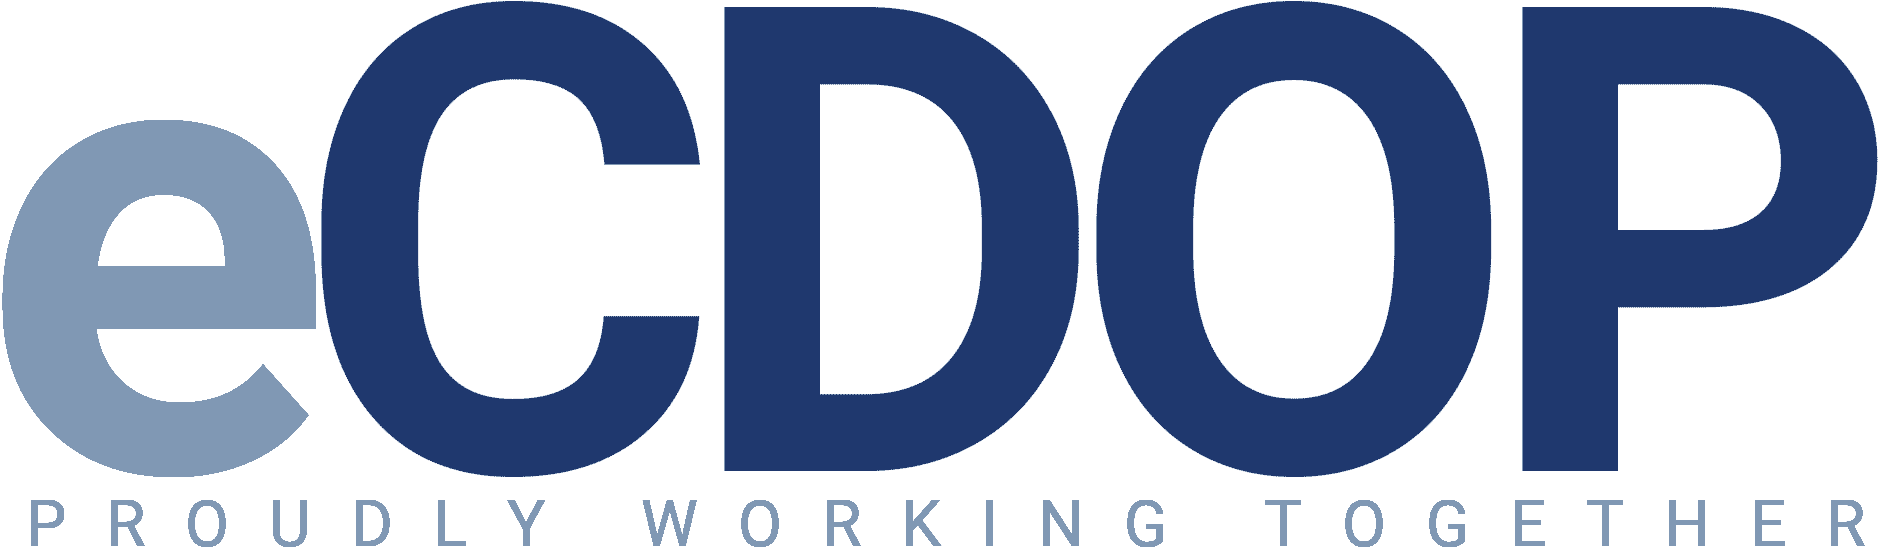 eCDOP Logo - Small